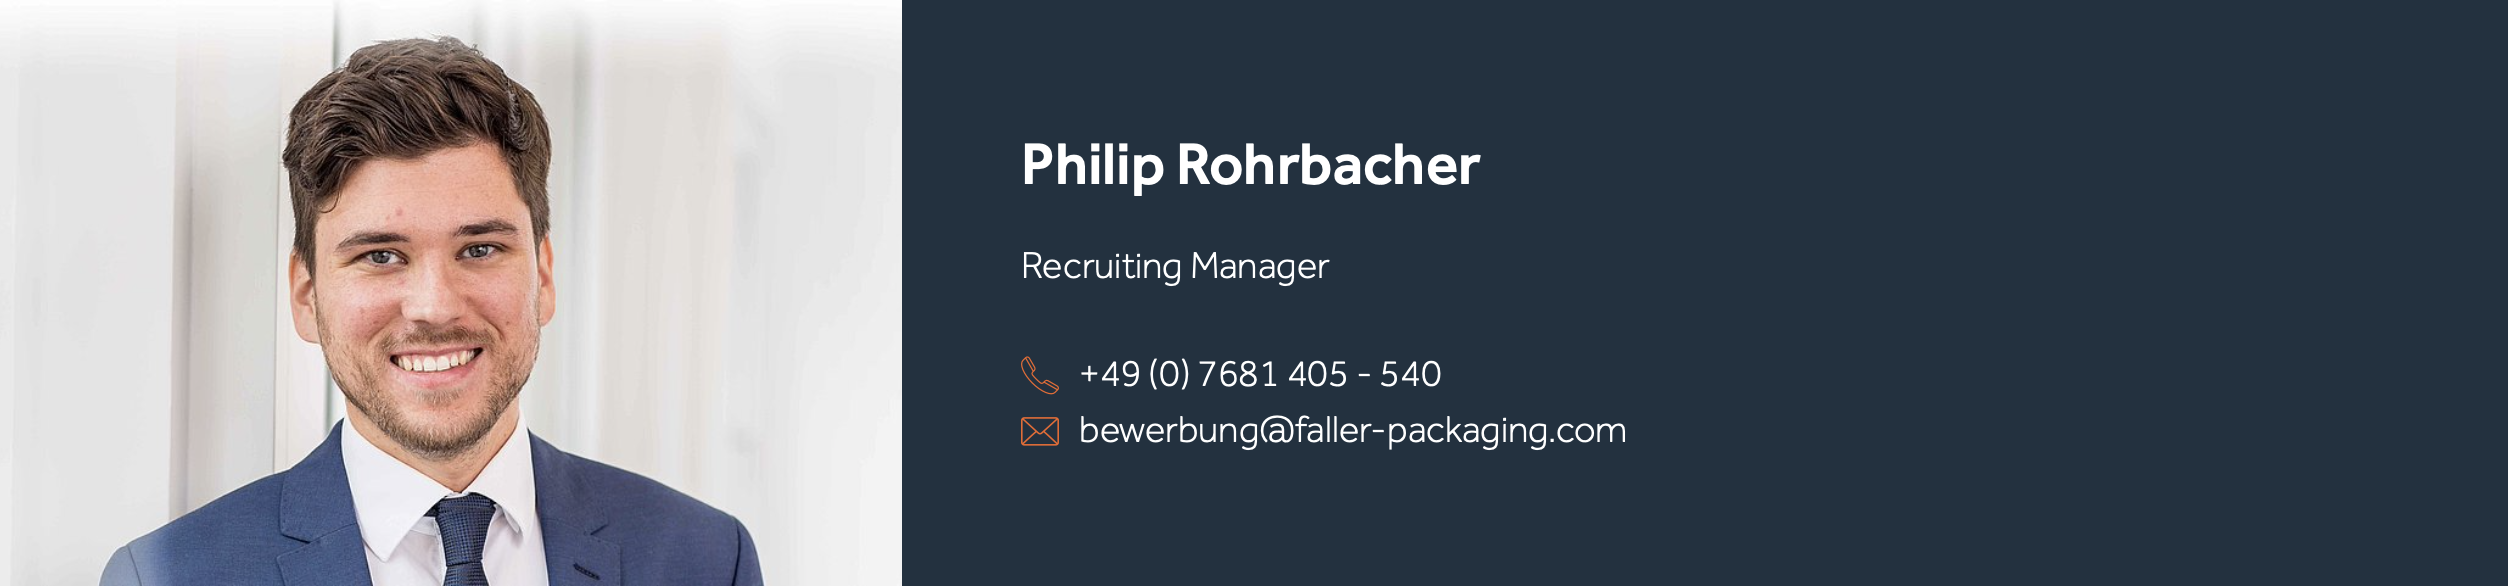 Philip Rohrbacher - Recruiting Manger